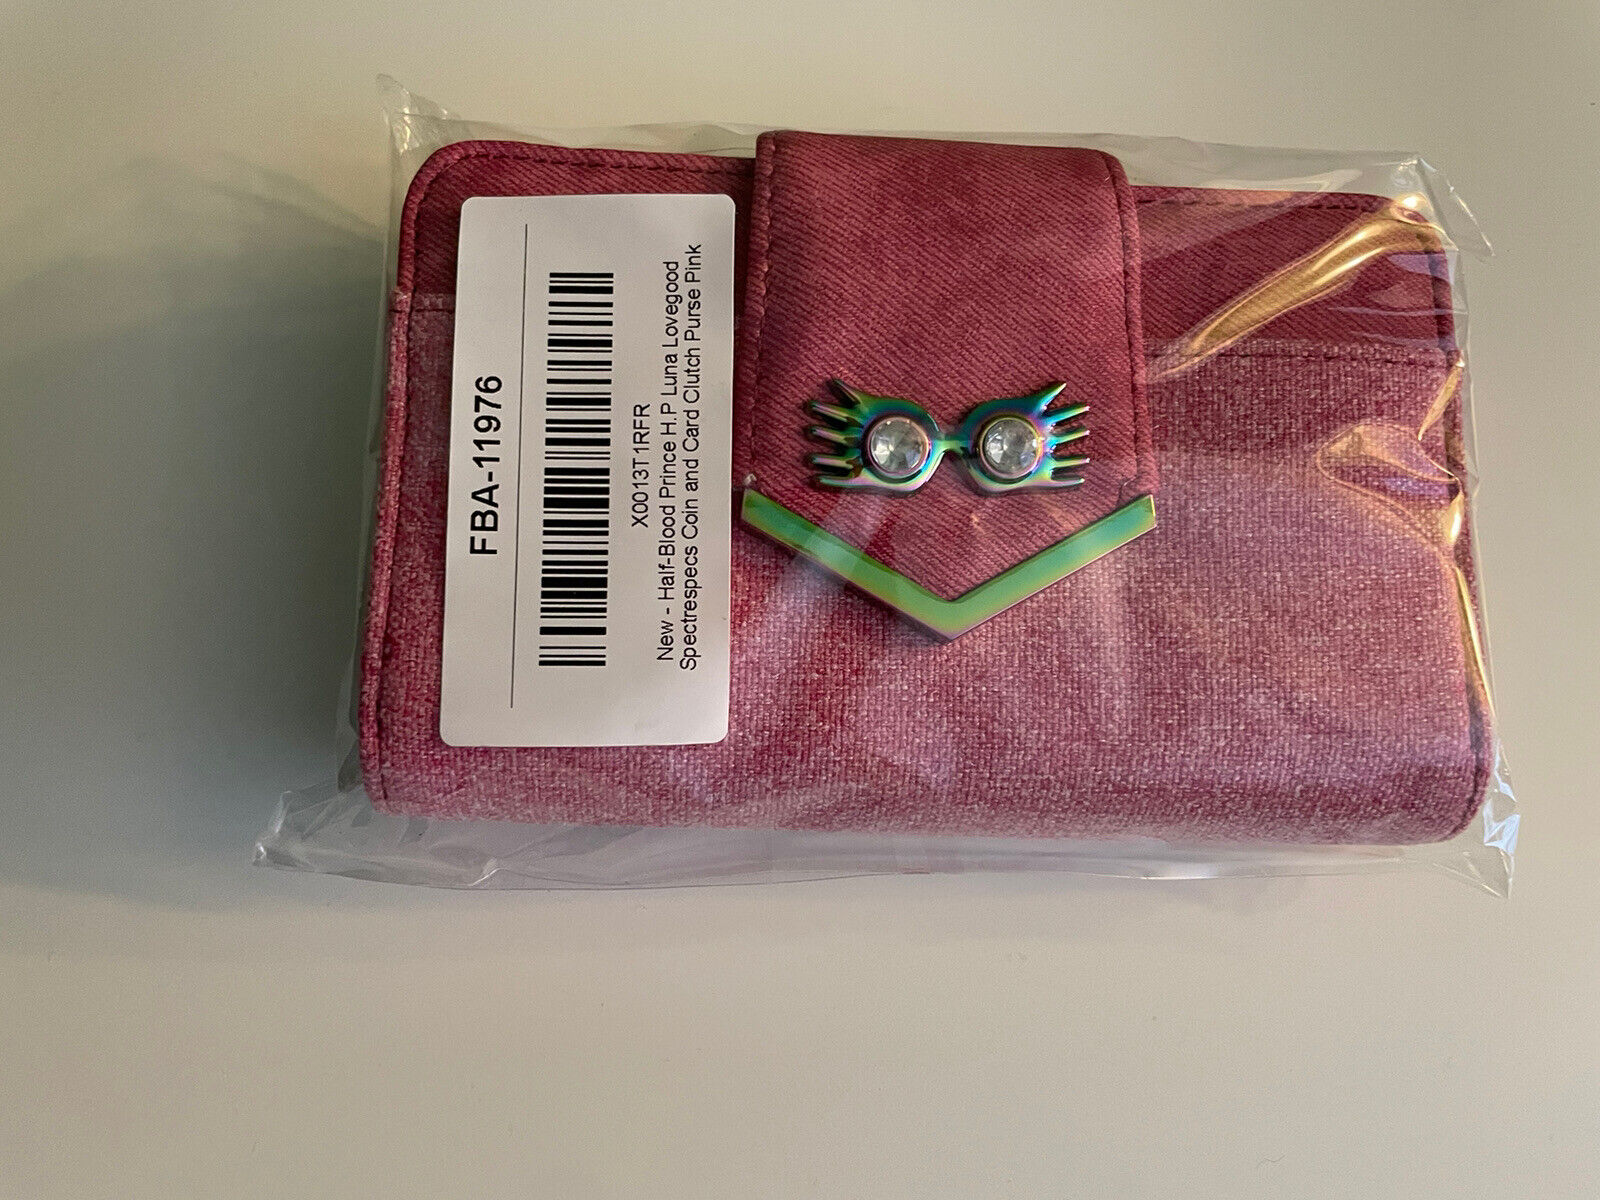 Harry Potter Luna Lovegood Spectrespecs Coin Wallet & Card Clutch -New-Sealed